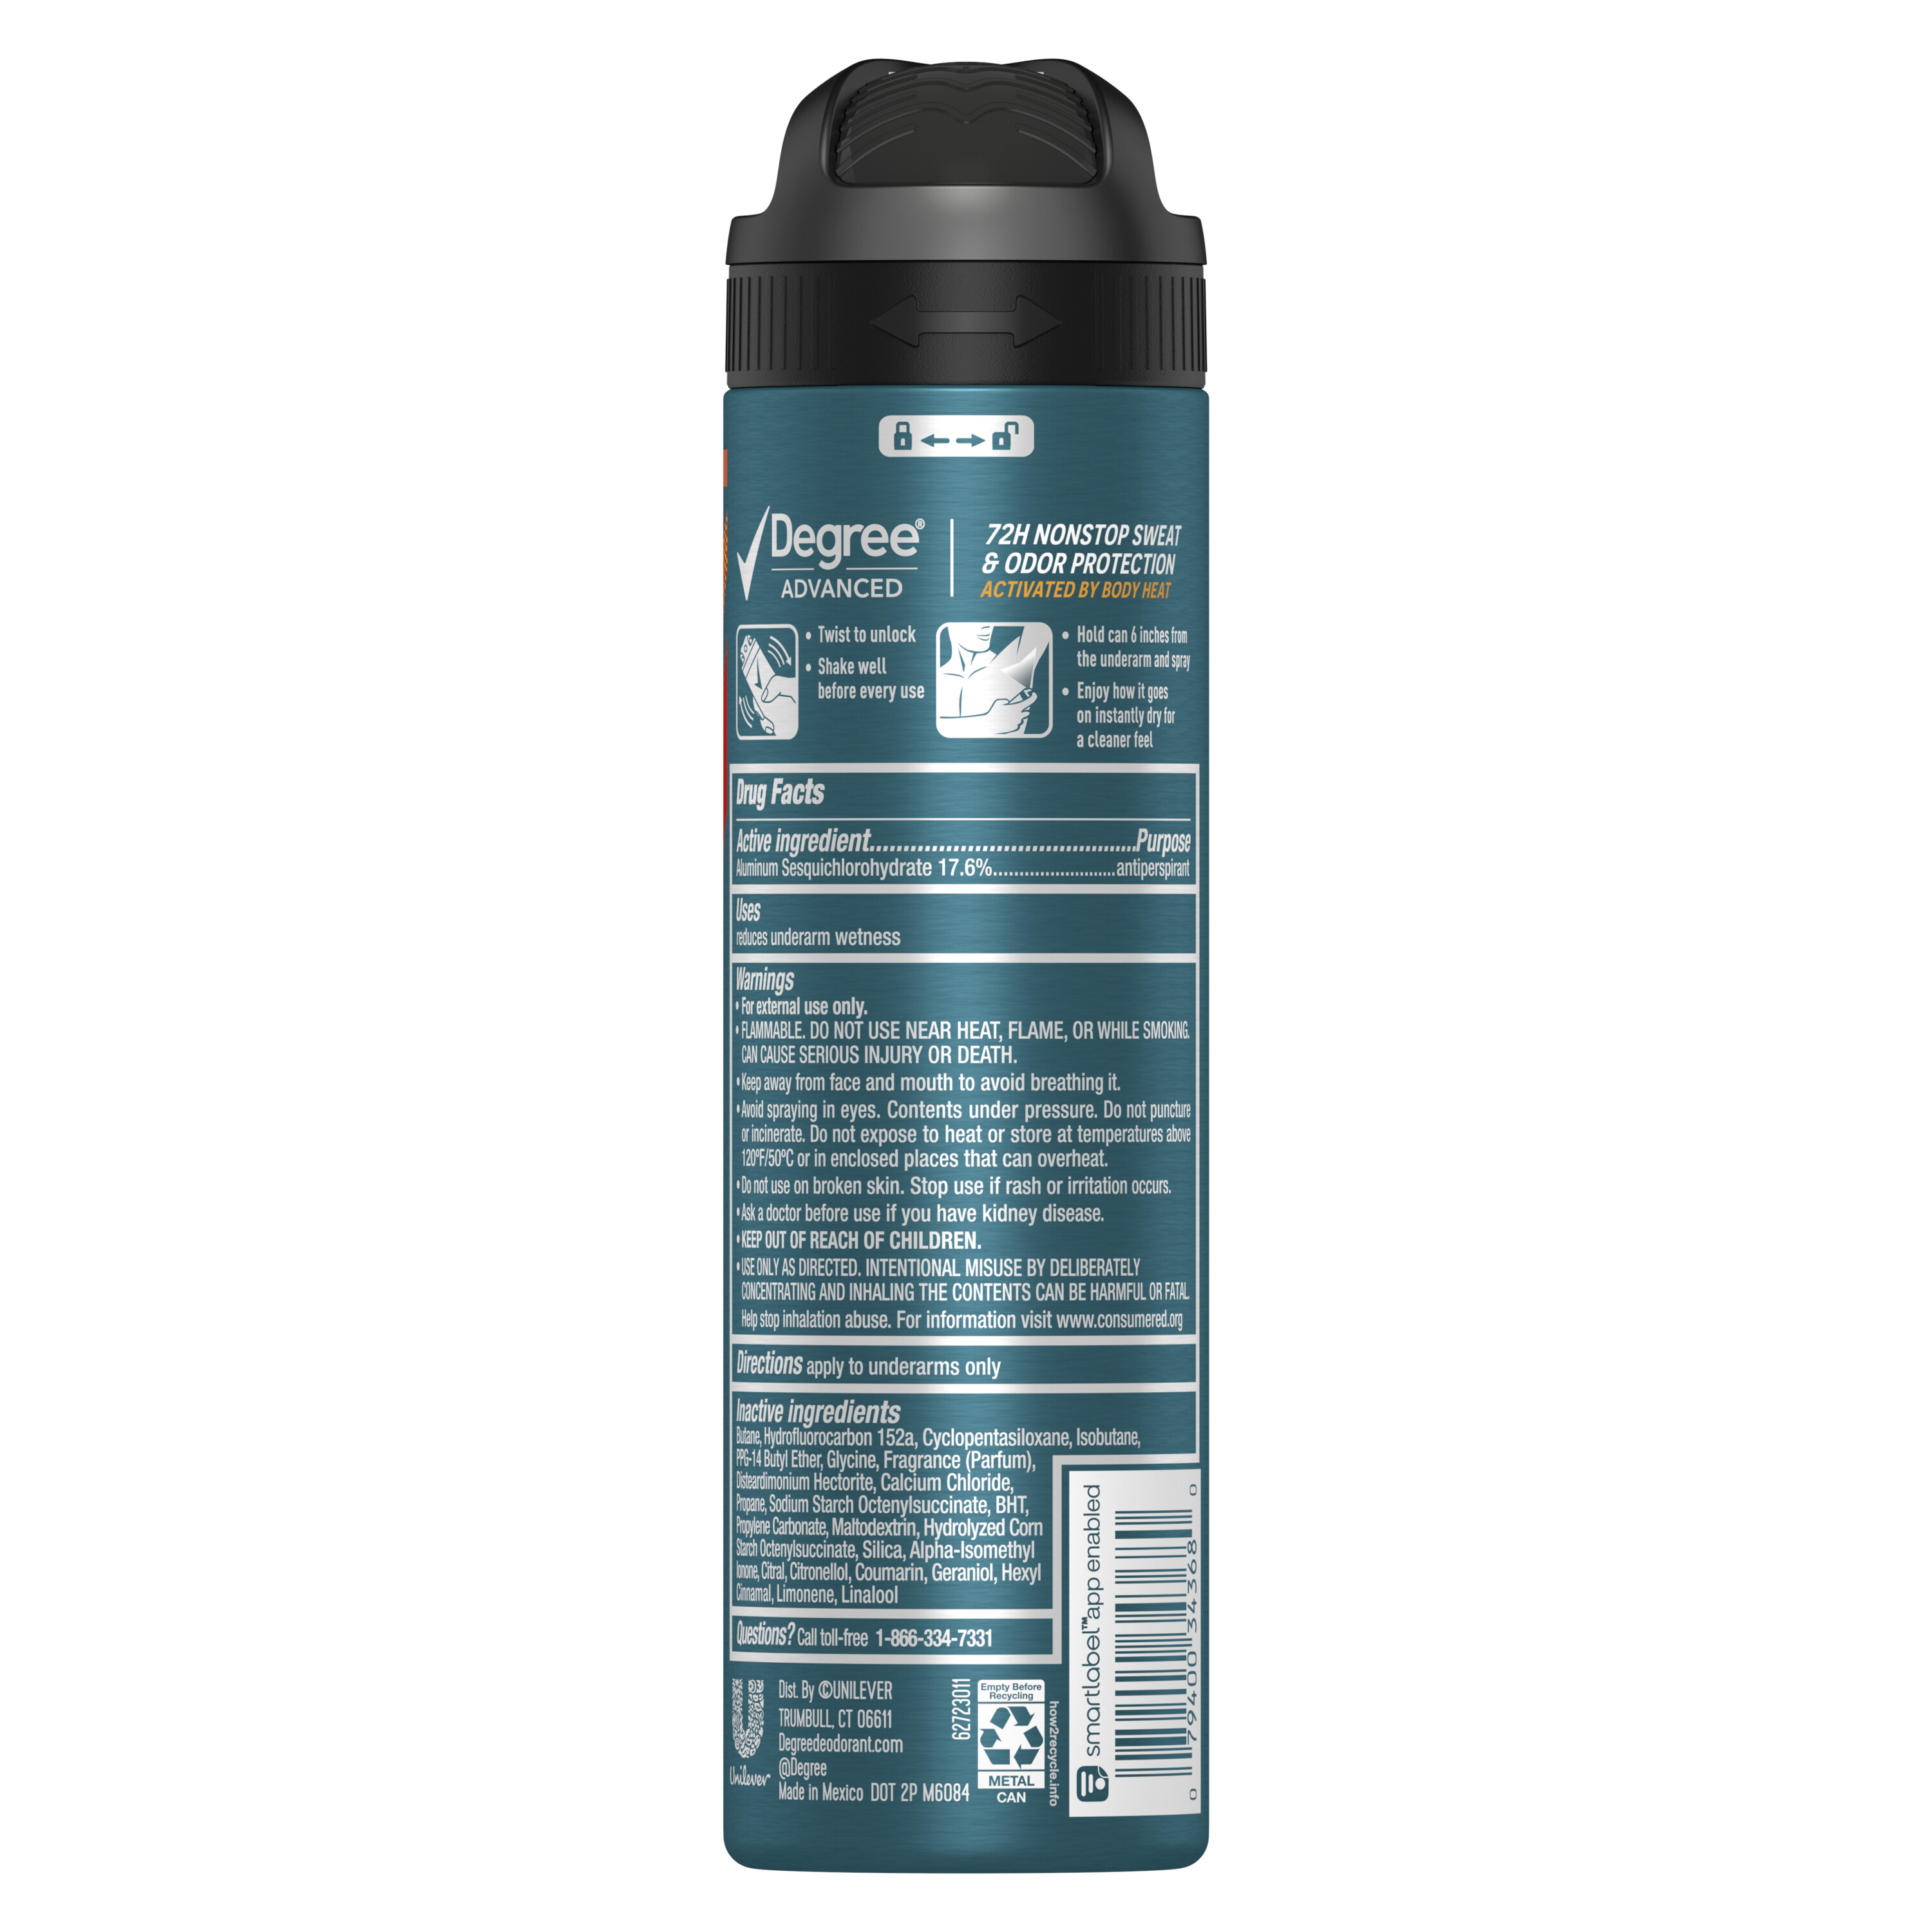 Degree Advanced Long Lasting Men's Antiperspirant Deodorant Dry Spray Adventure, 3.8 oz - image 5 of 7